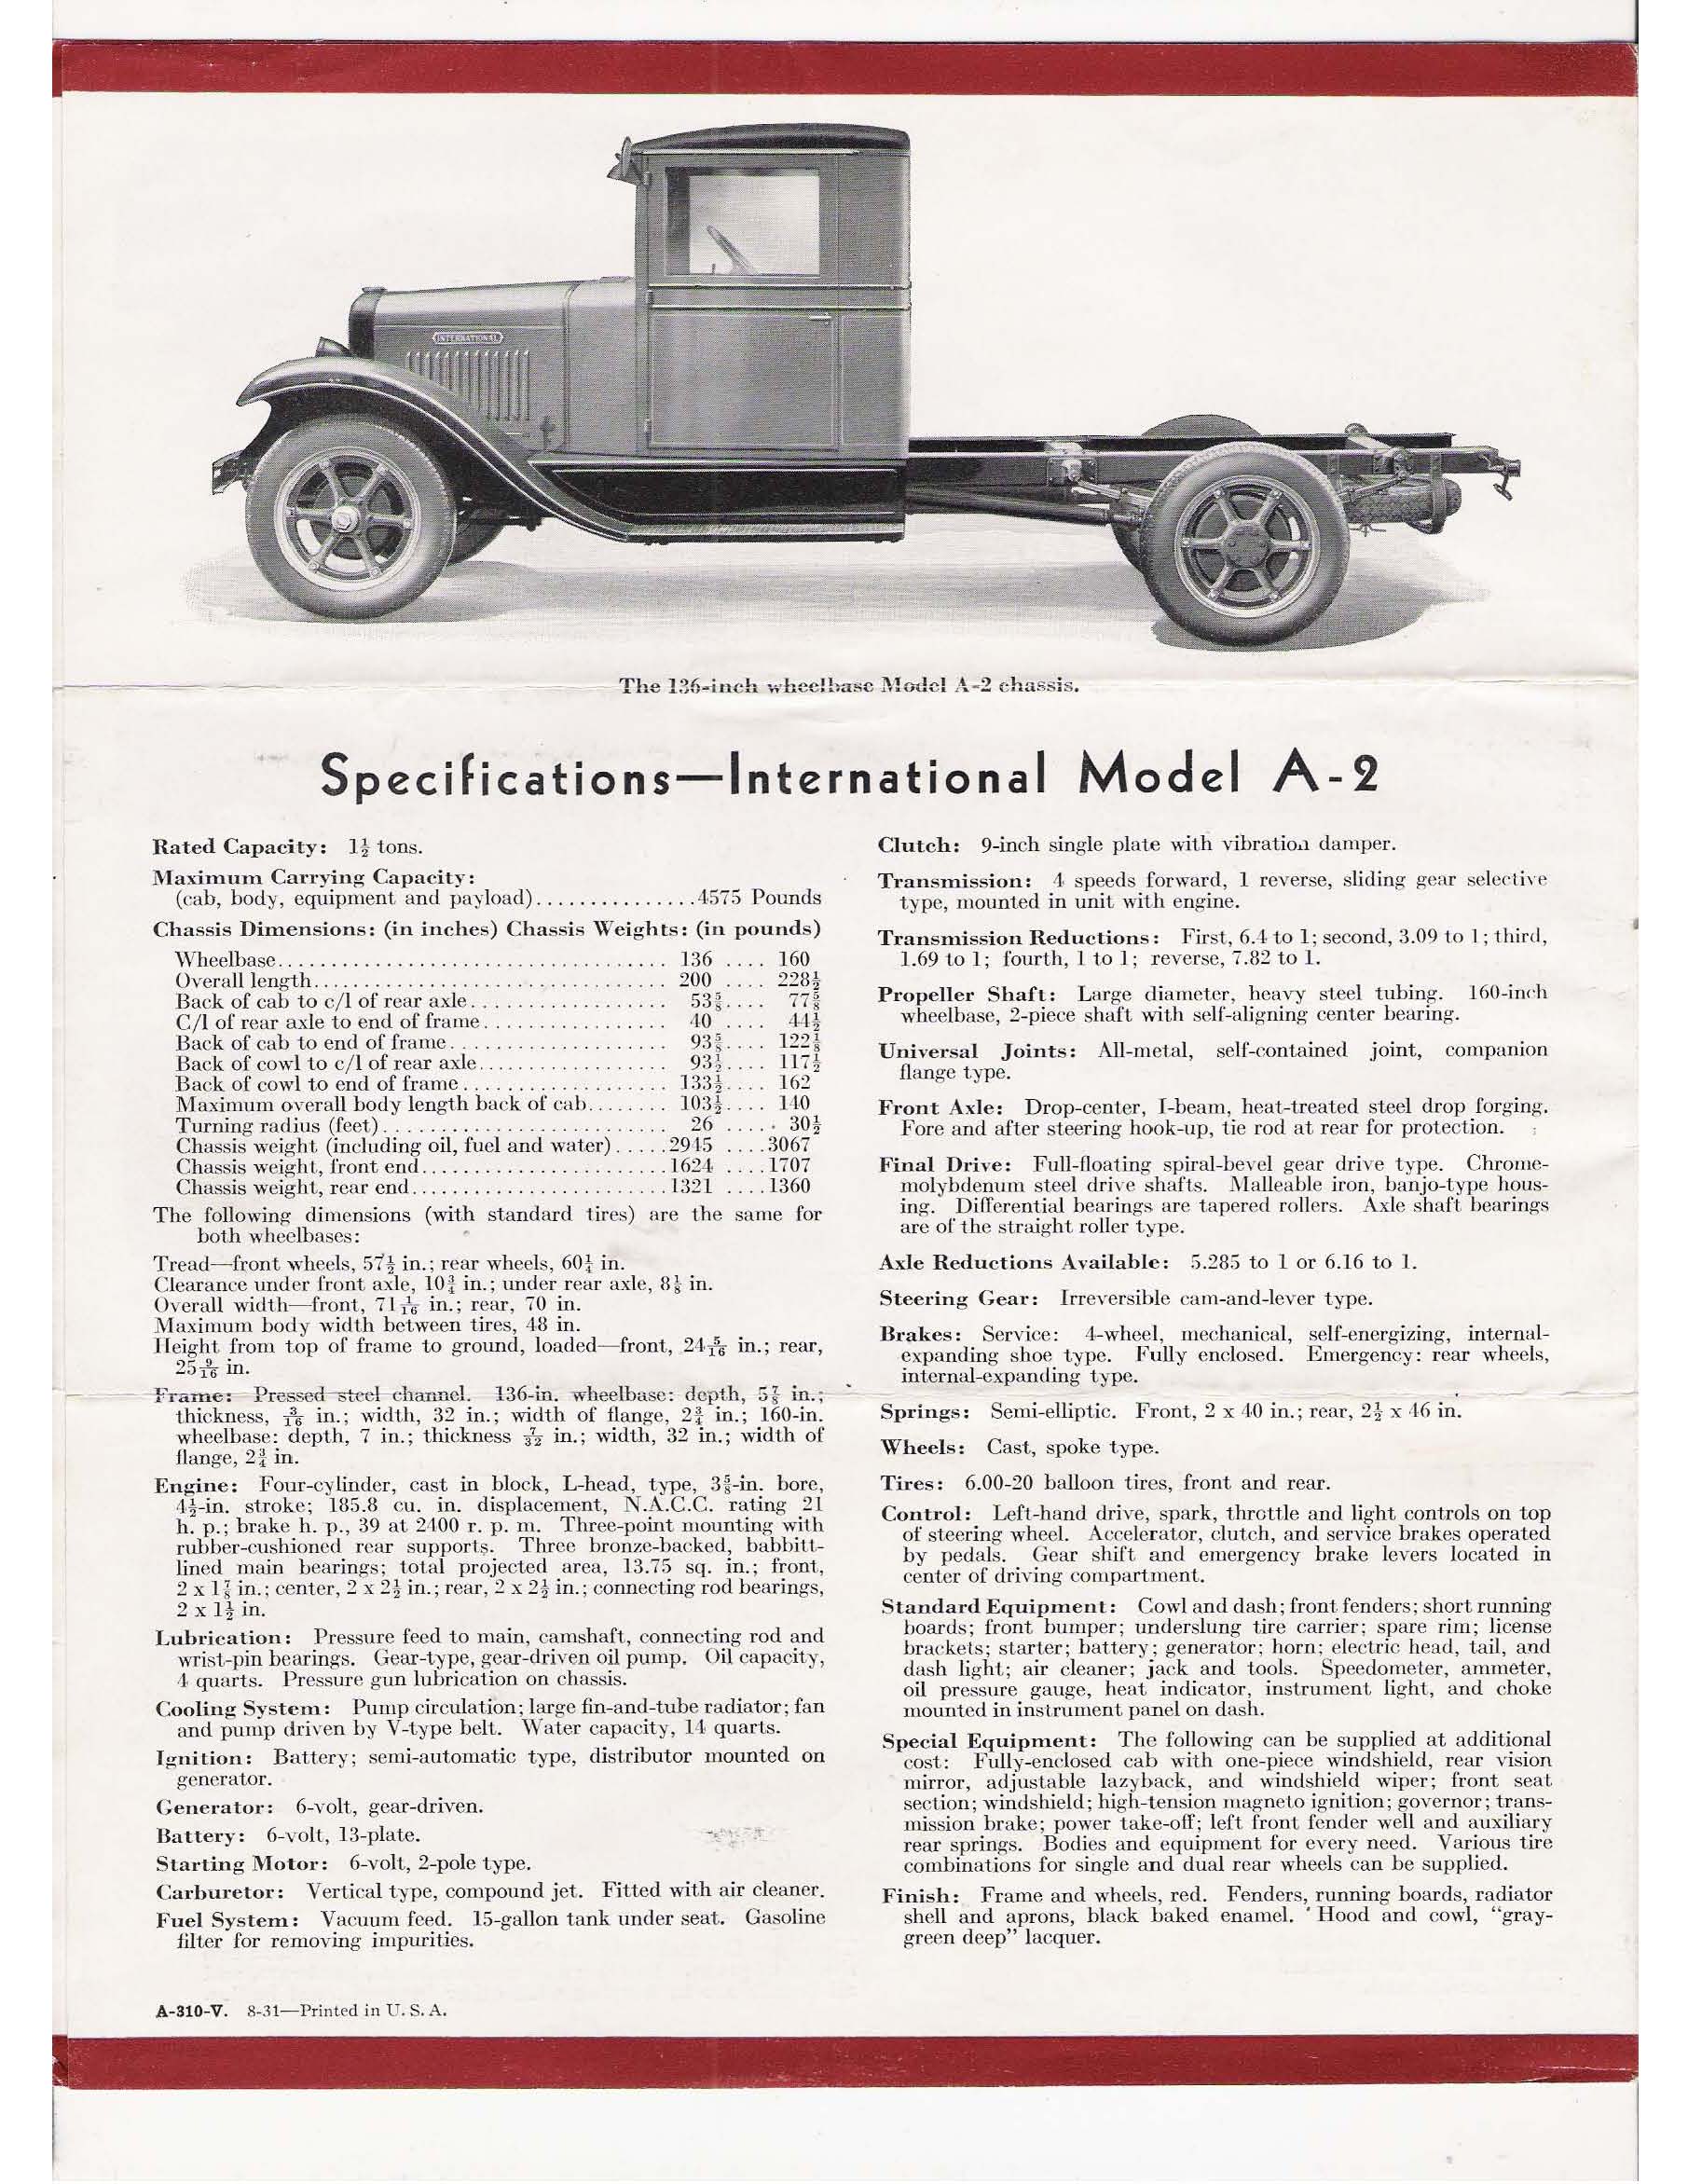 1932 International A-2 Foldout Page 1